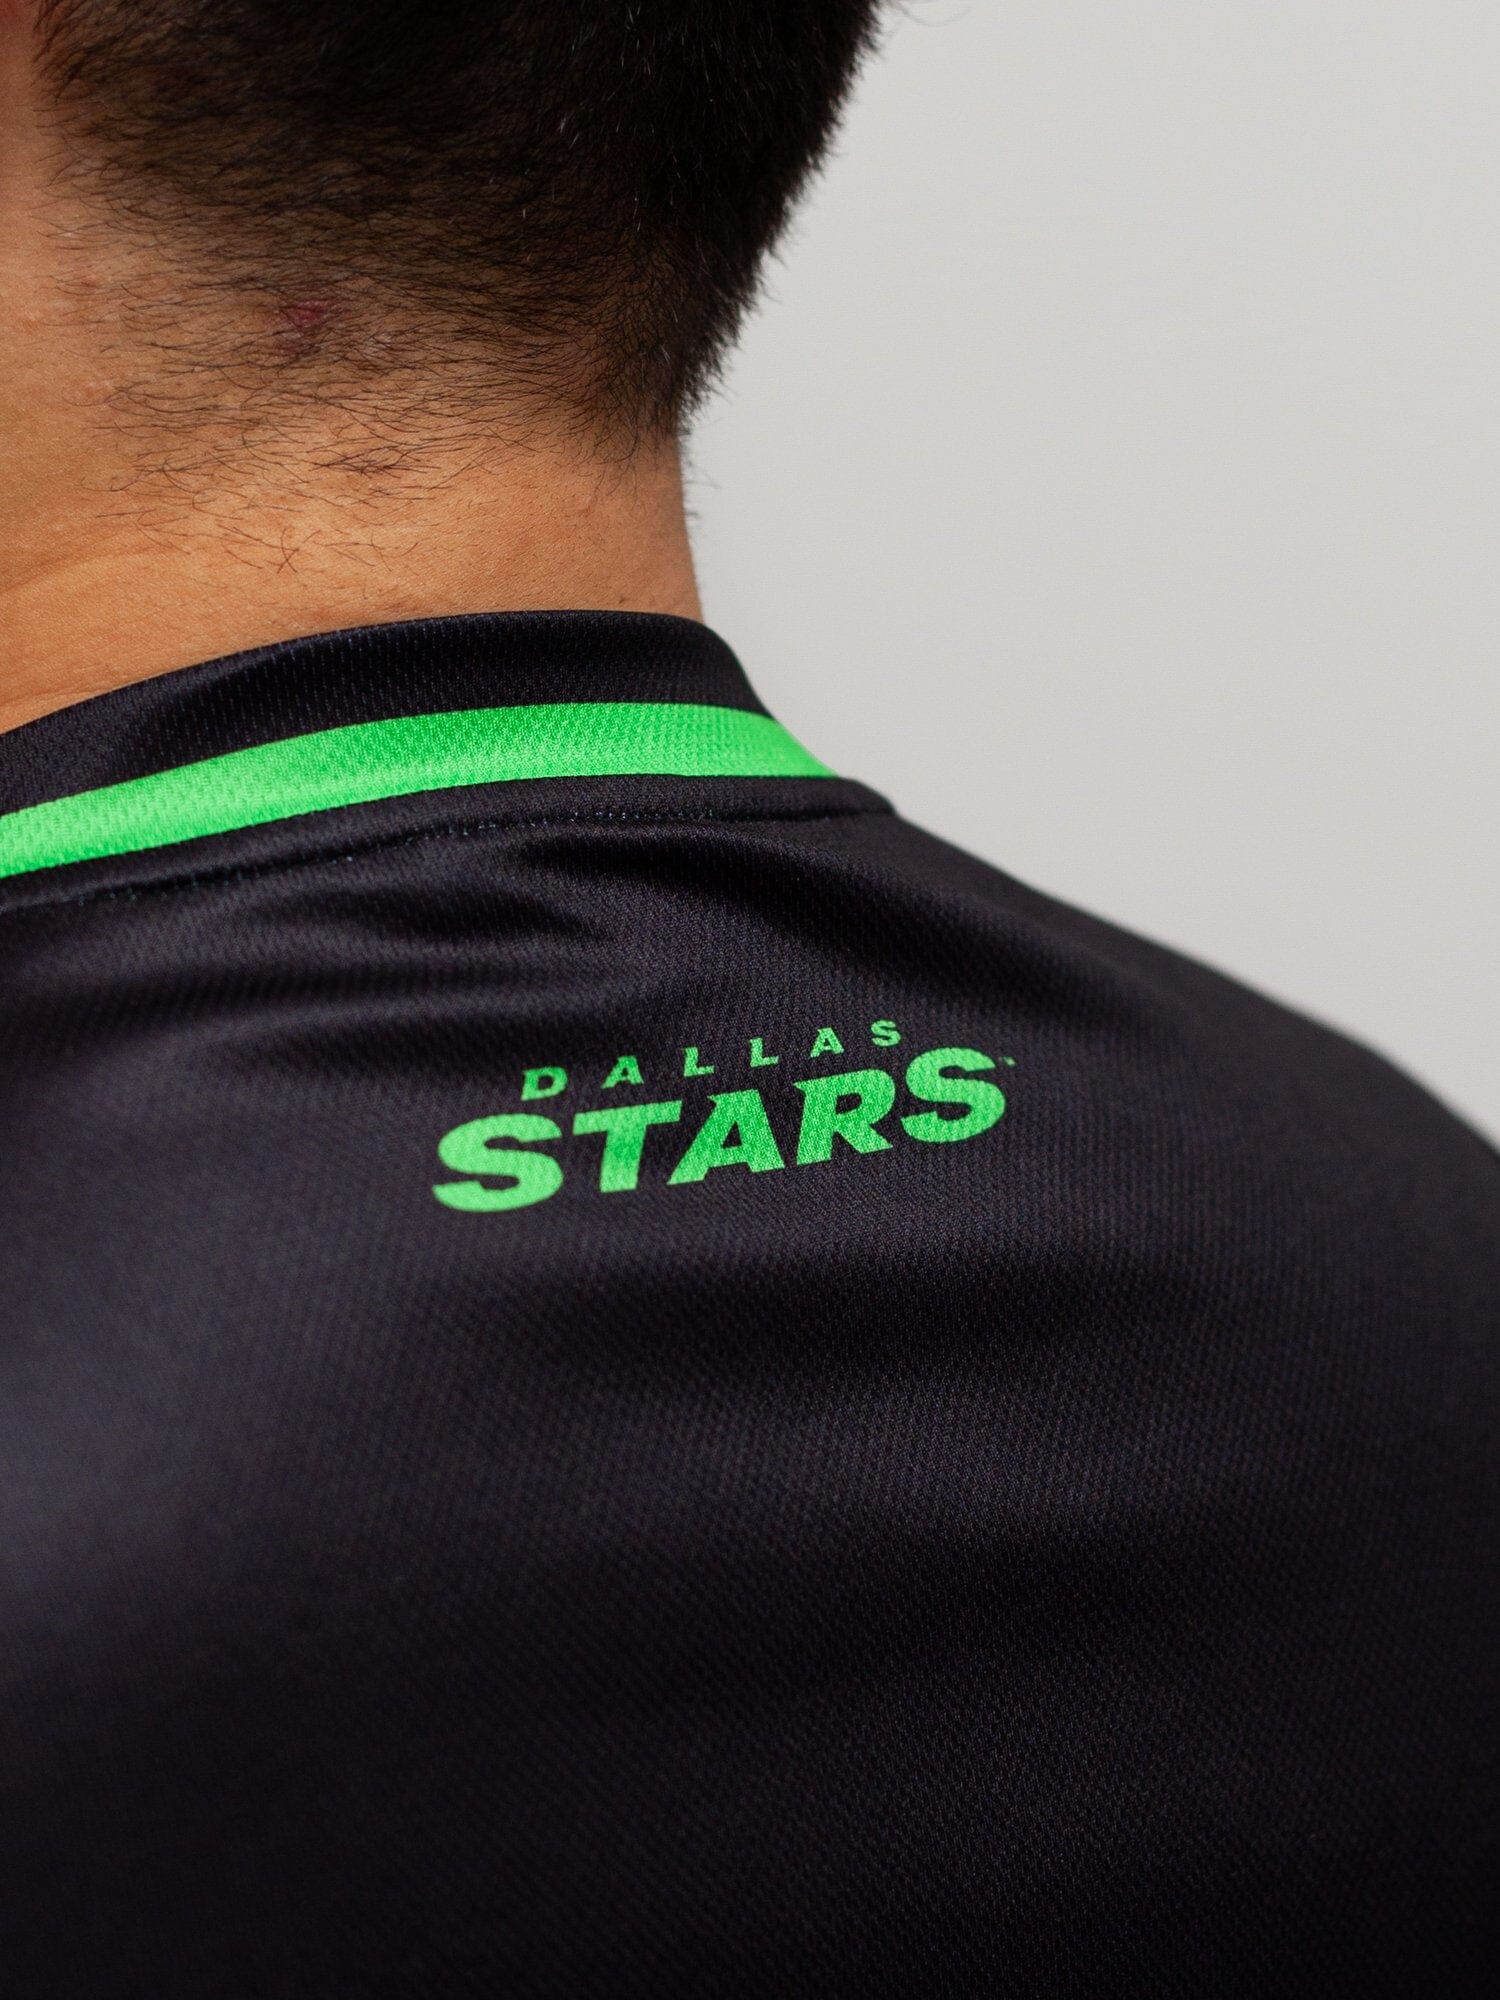 Twitter reacts to Dallas Stars' new neon green 'Blackout' jerseys